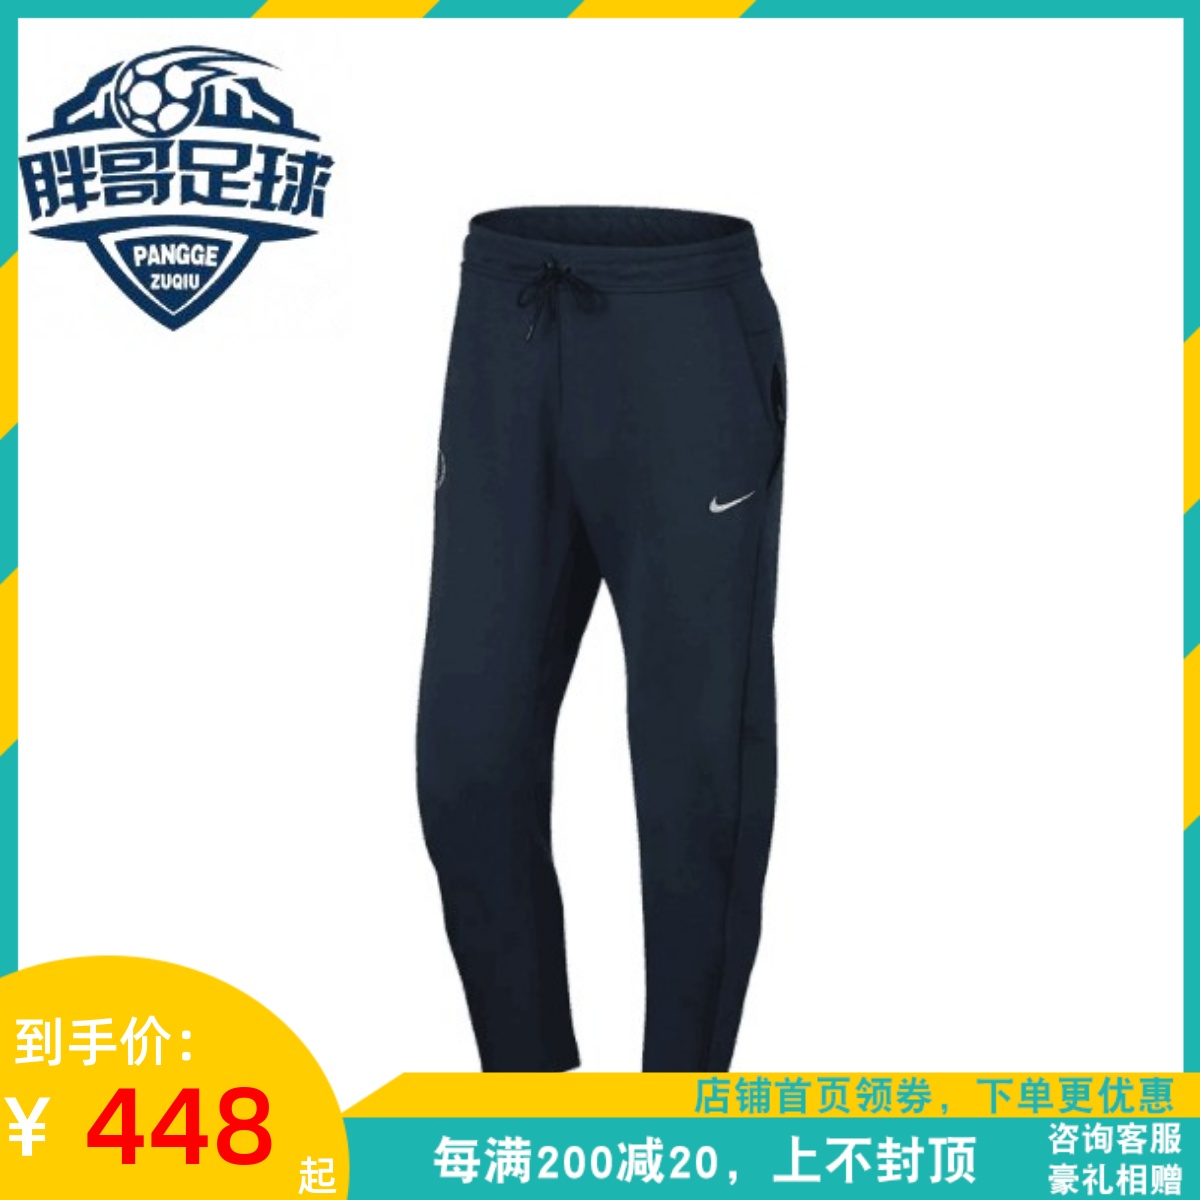 The Little Fat Man Nike Nike Men's Premier League Chelsea Sport Leisure Football Long pants AH5462-455